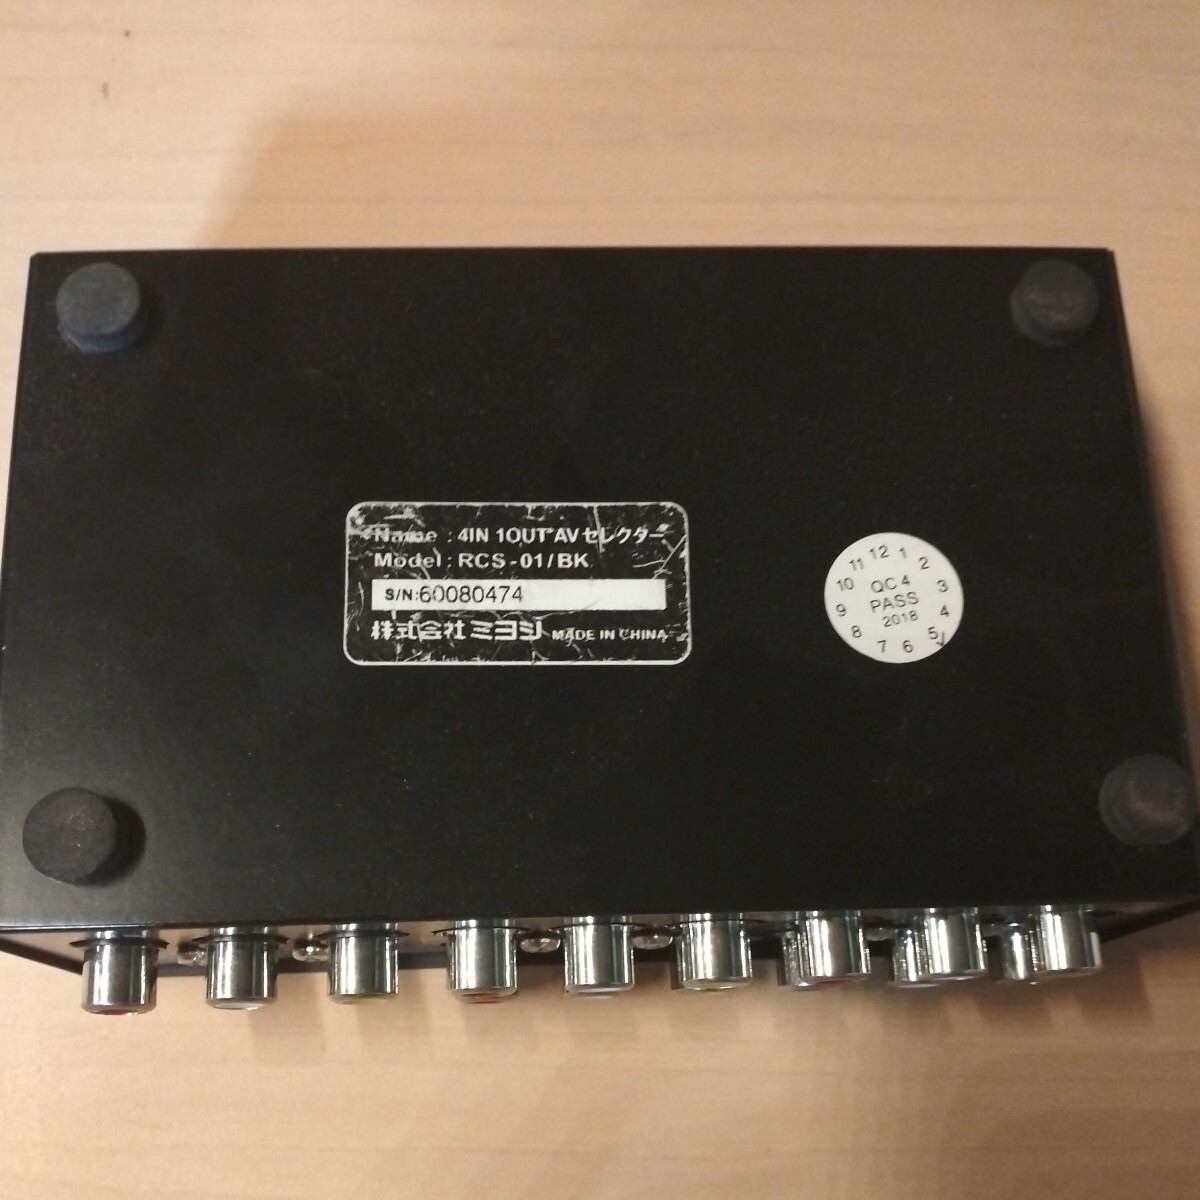 miyosiMCO 4 input 1 output AV selector black RCS-01/BK